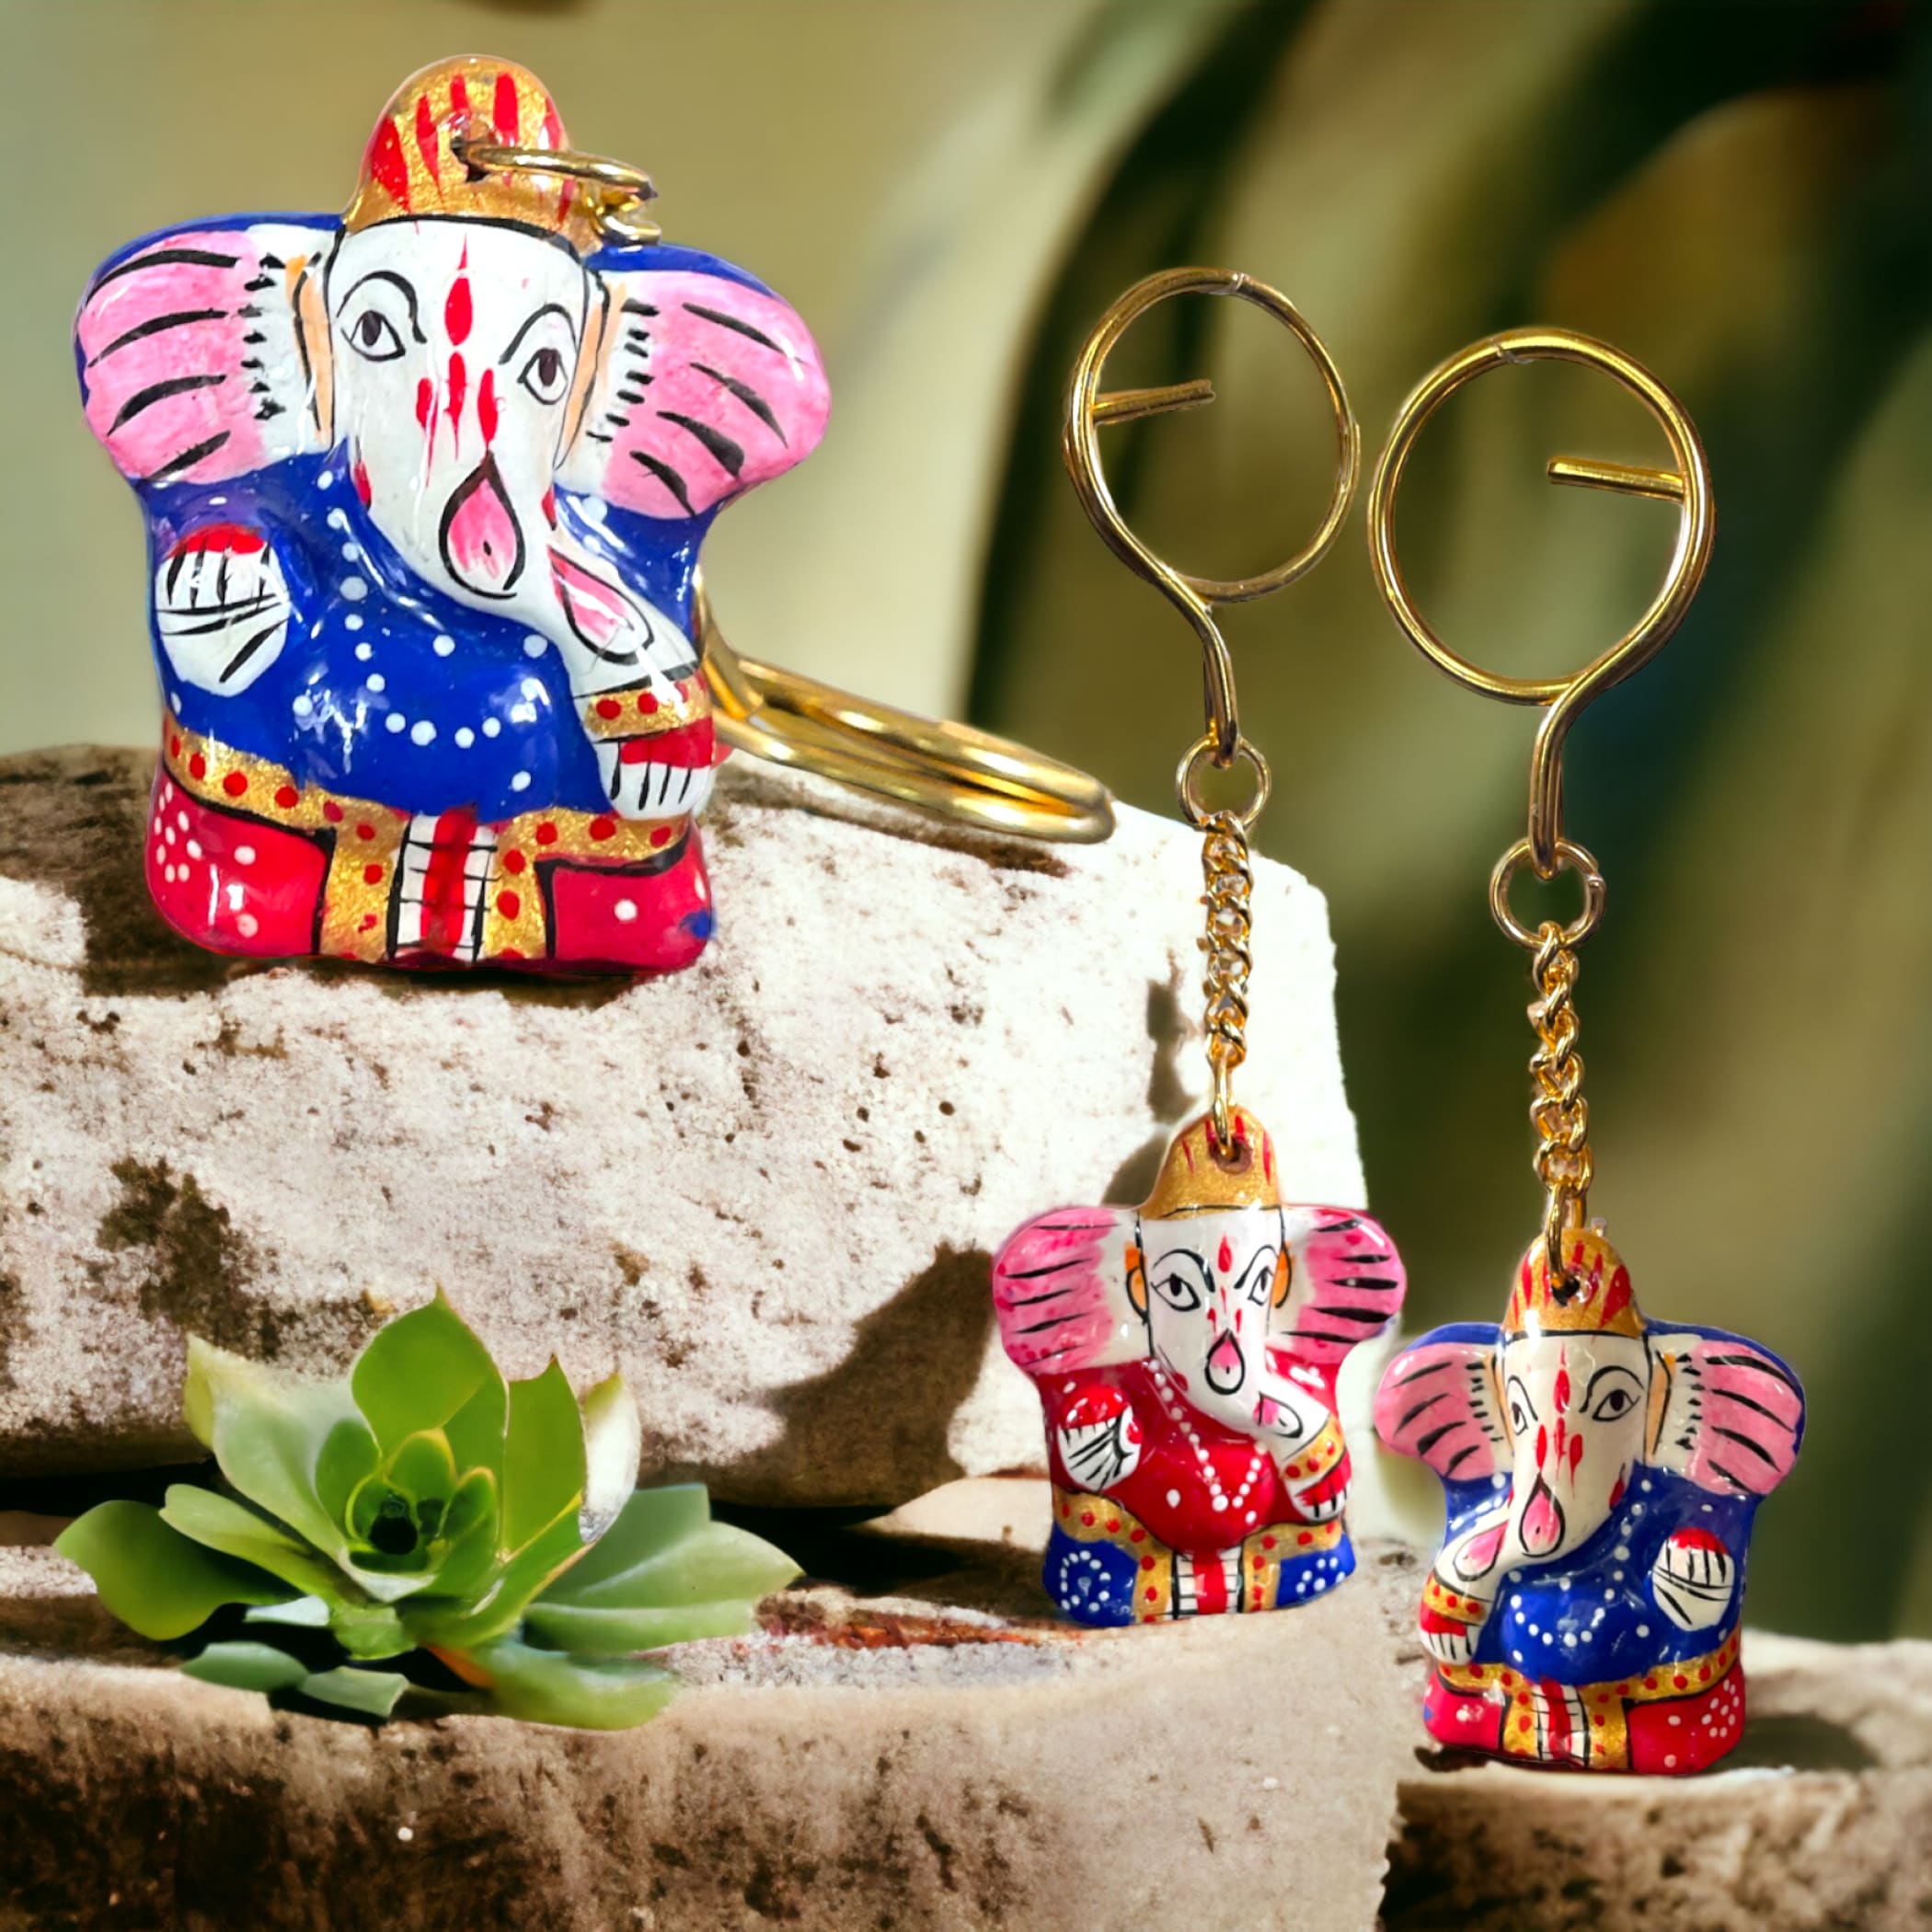 Ceramic ganesh keychain traditional lord ganesha pendant